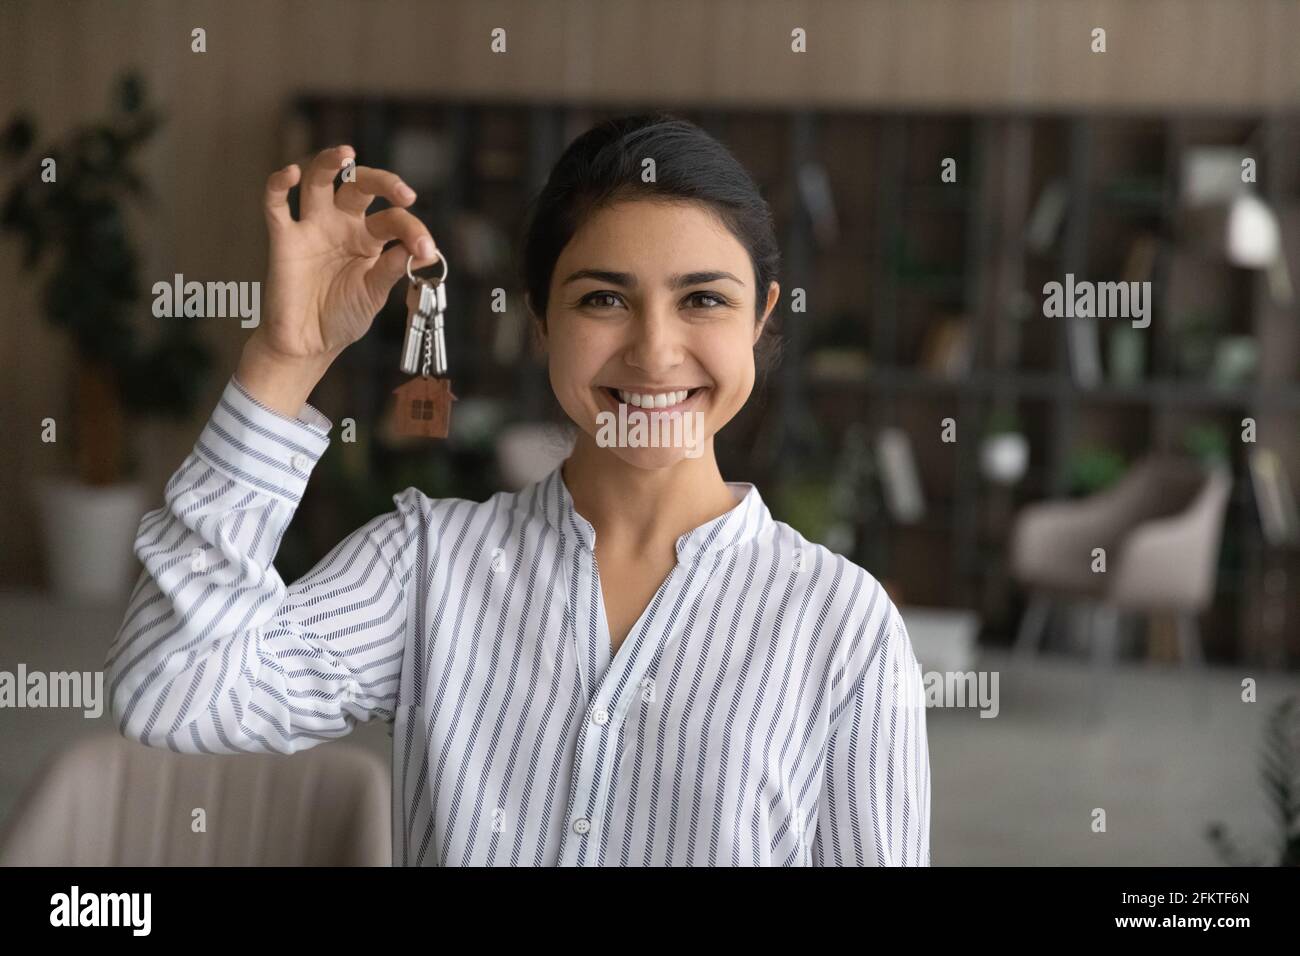 Head shot portrait smiling Indian woman showing keys, rejoicing relocation Stock Photo